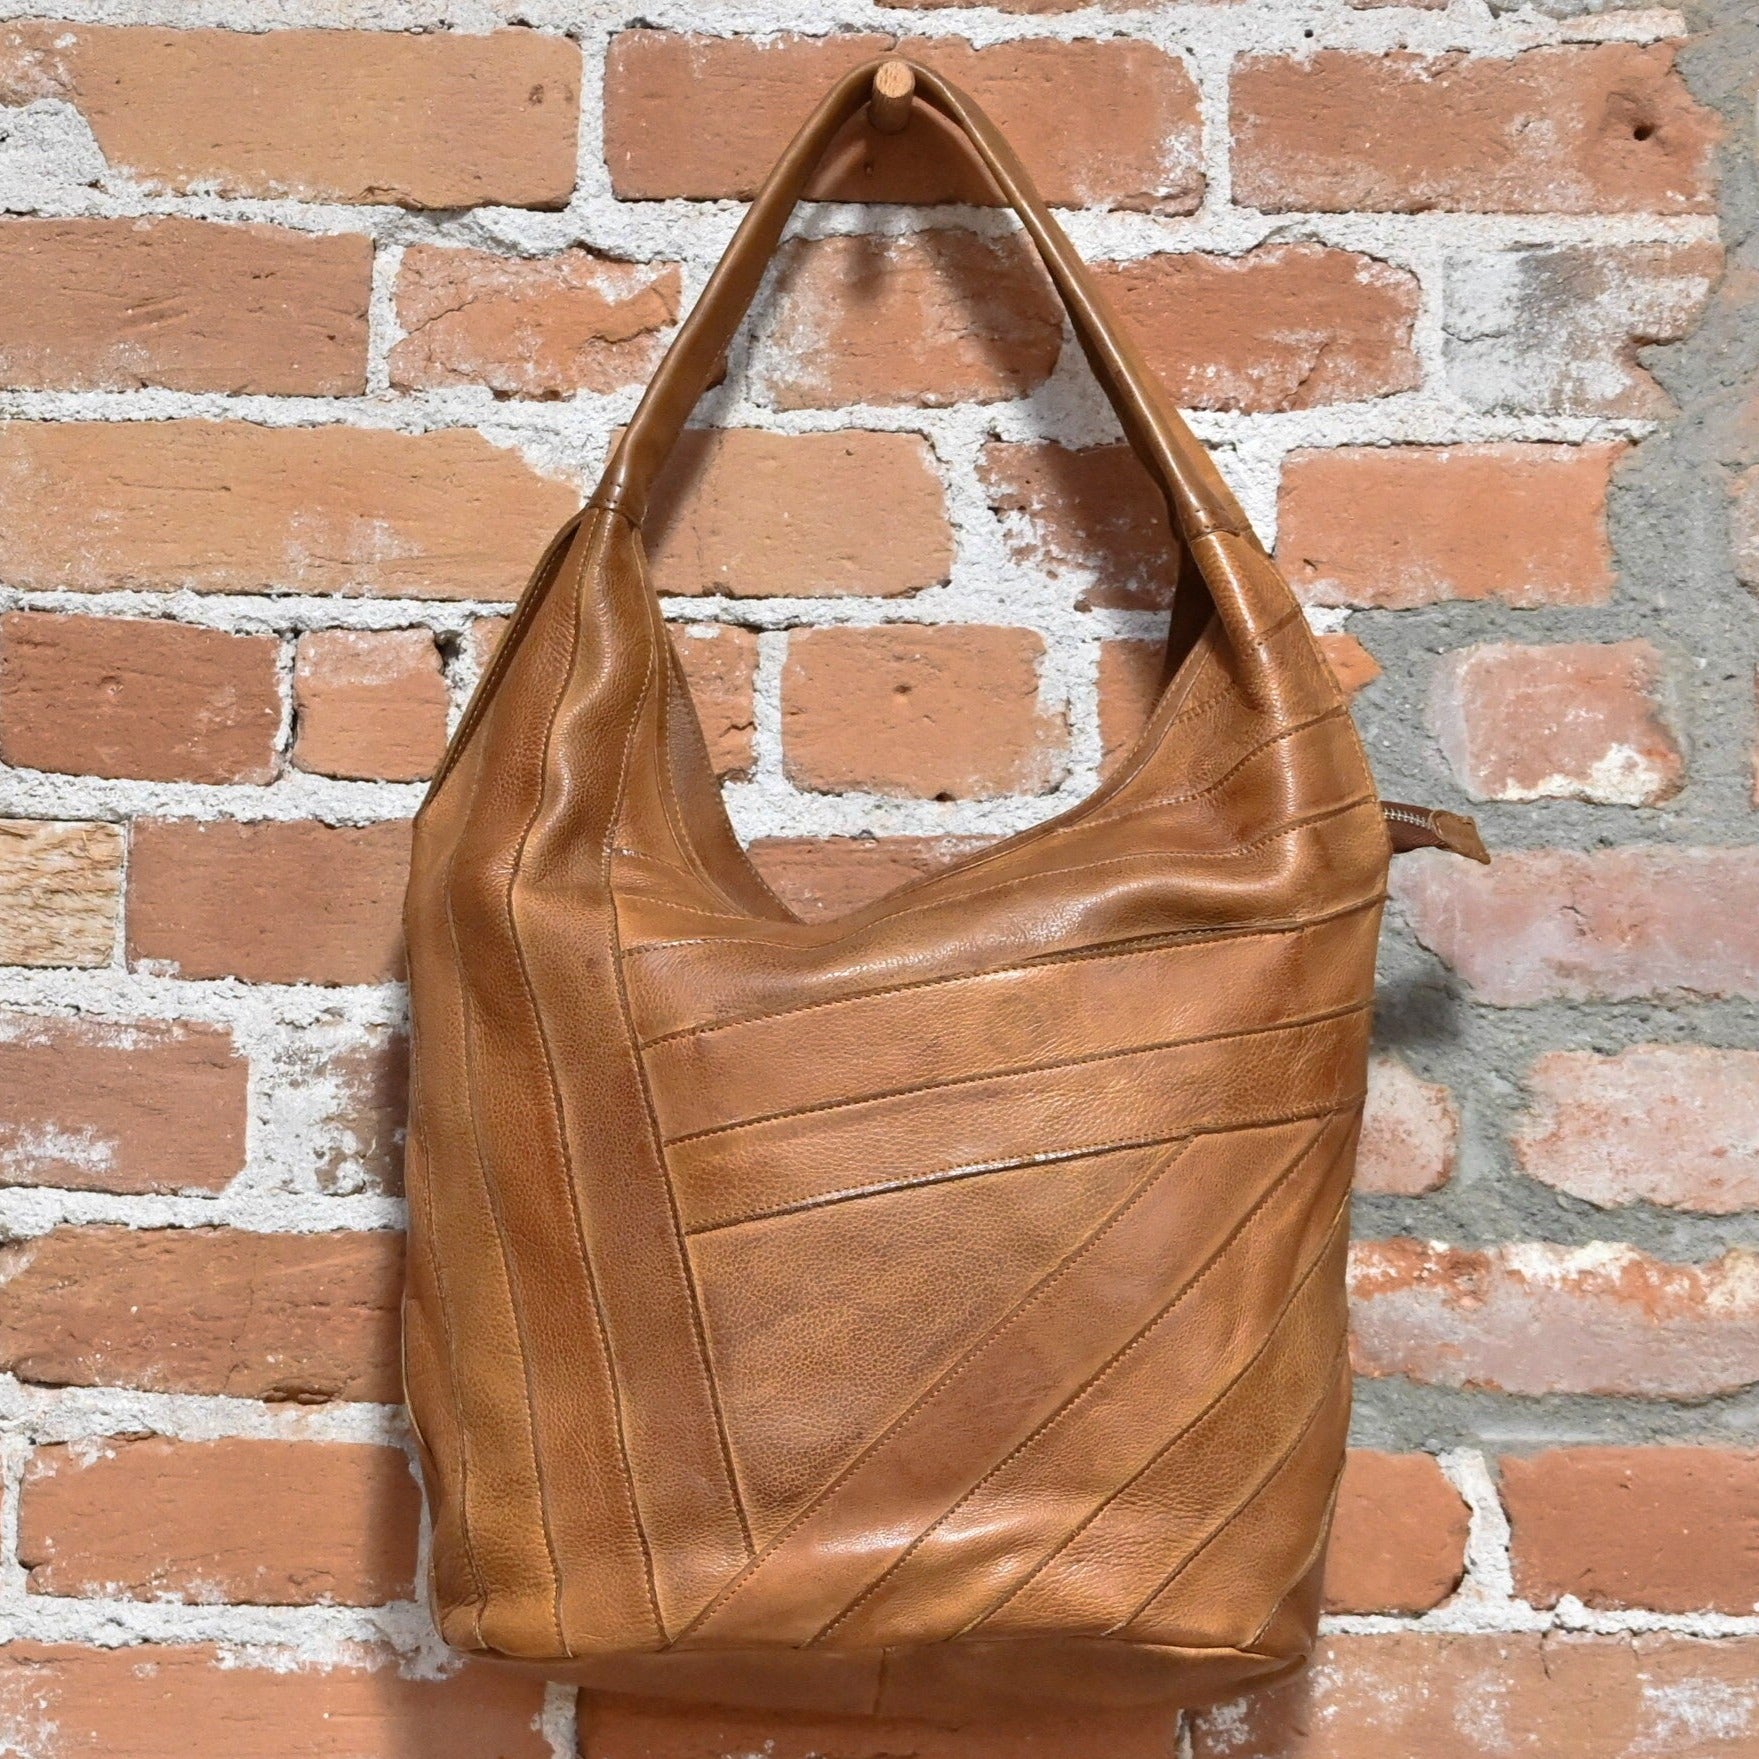 Latico Kiki Shoulder Bag in Cognac view of front hanging